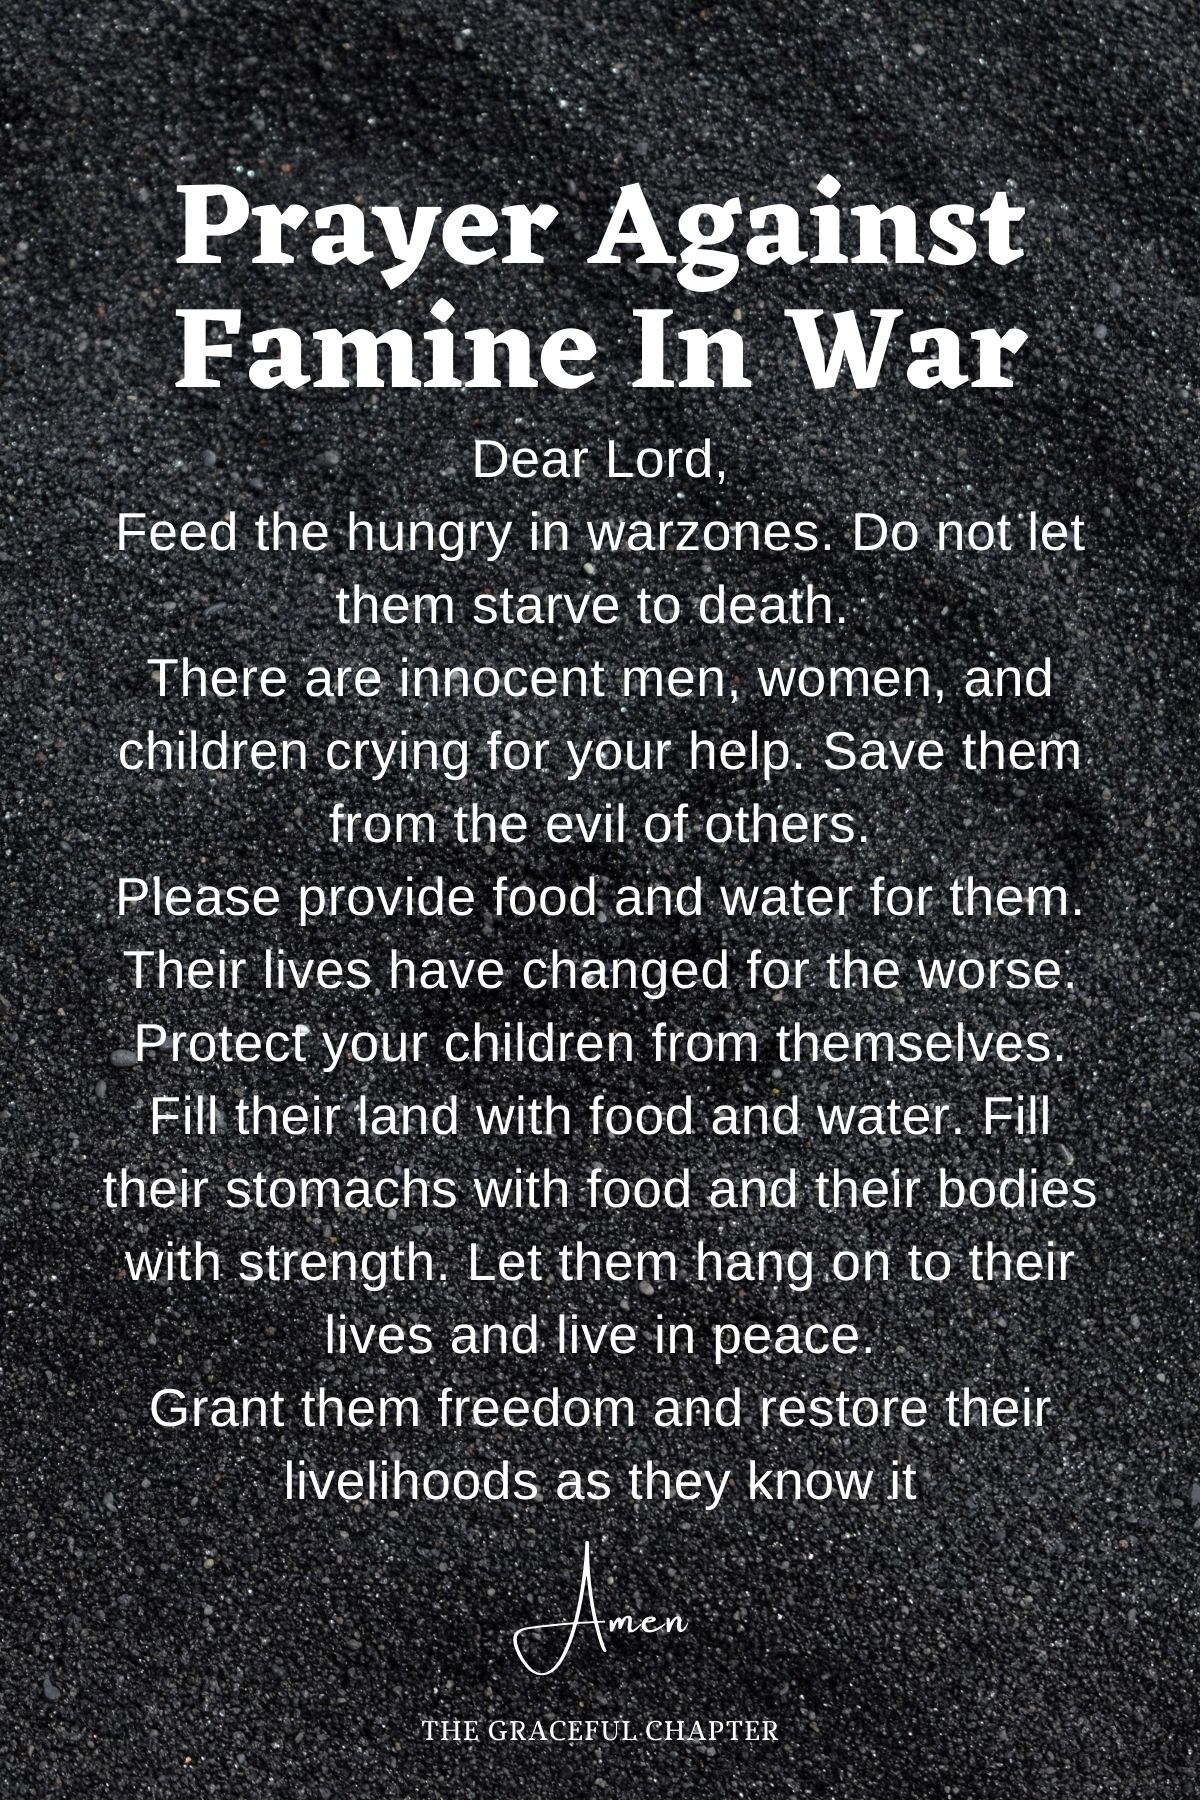 Prayer against famine in war